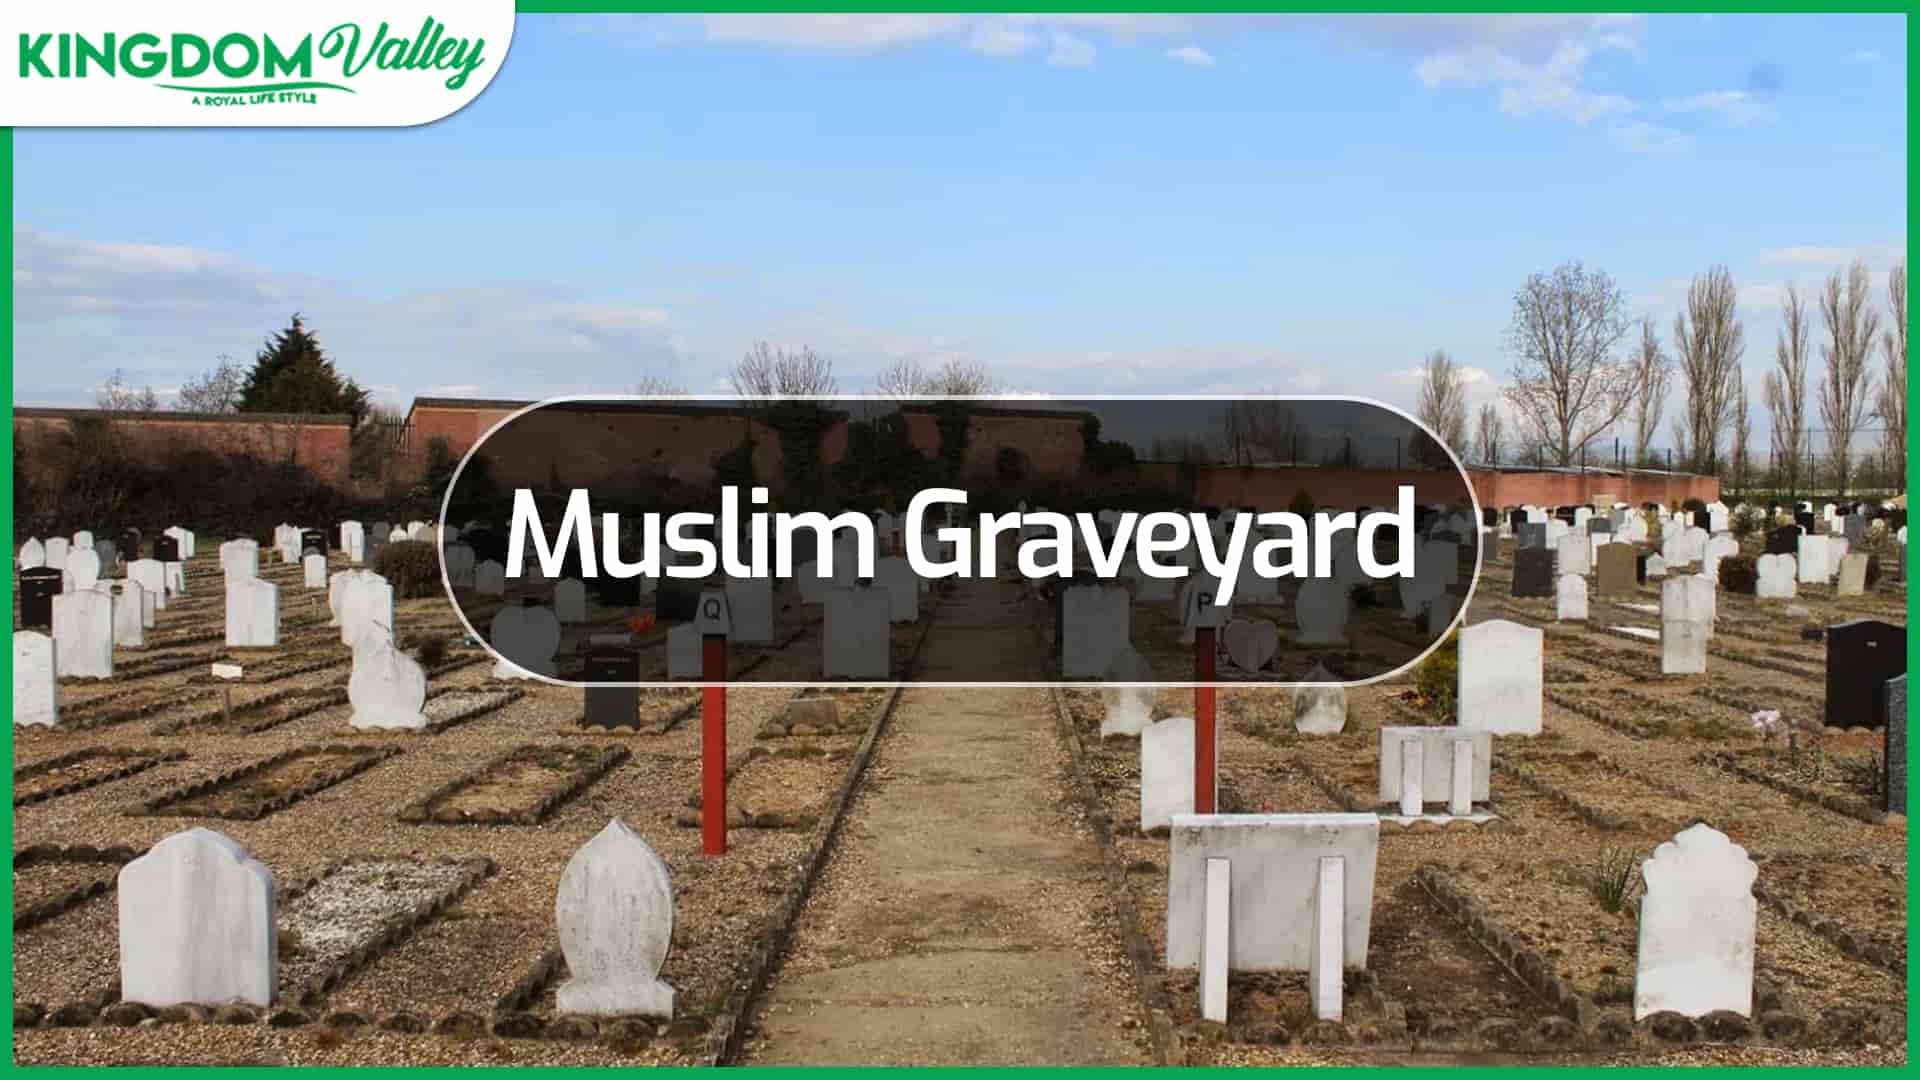 kindom valley muslim graveyard 